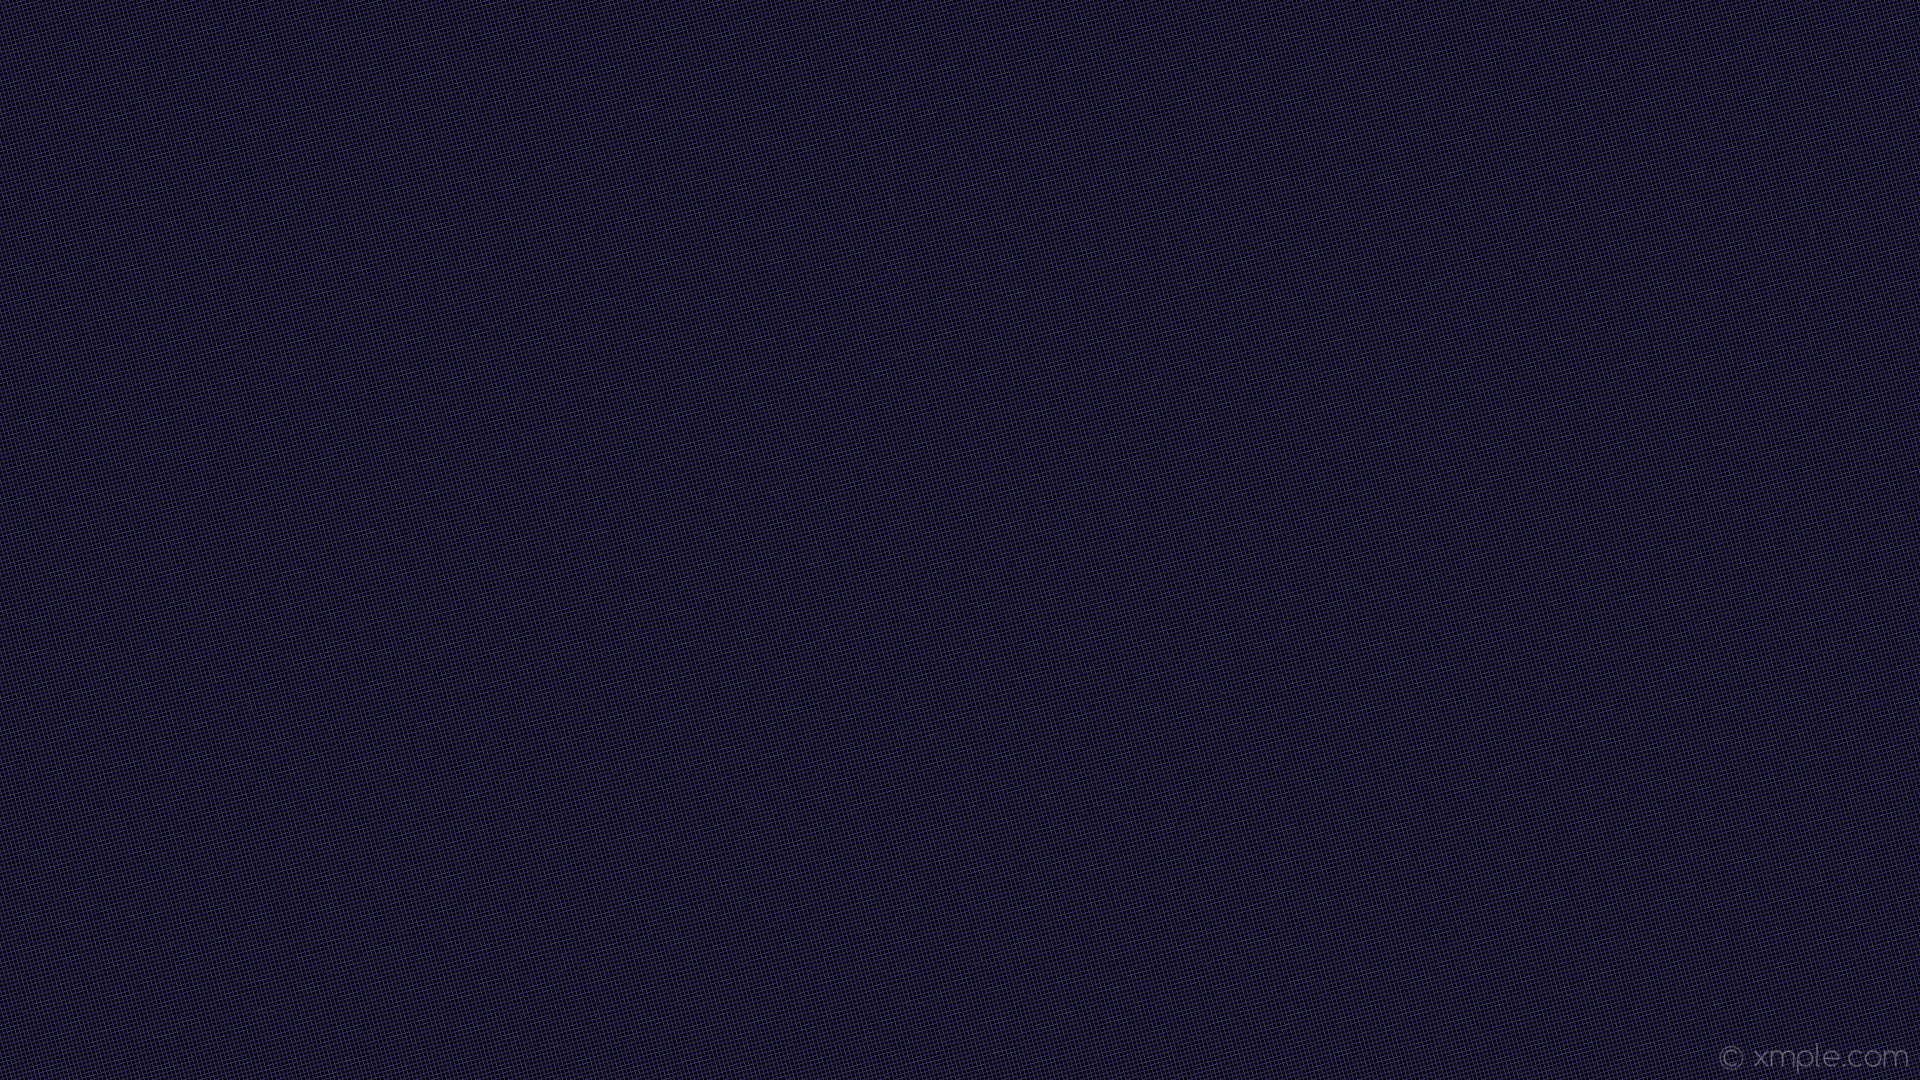 1920x1080 wallpaper graph paper black purple grid dark slate blue #000000 #483d8b 15Â°  1px